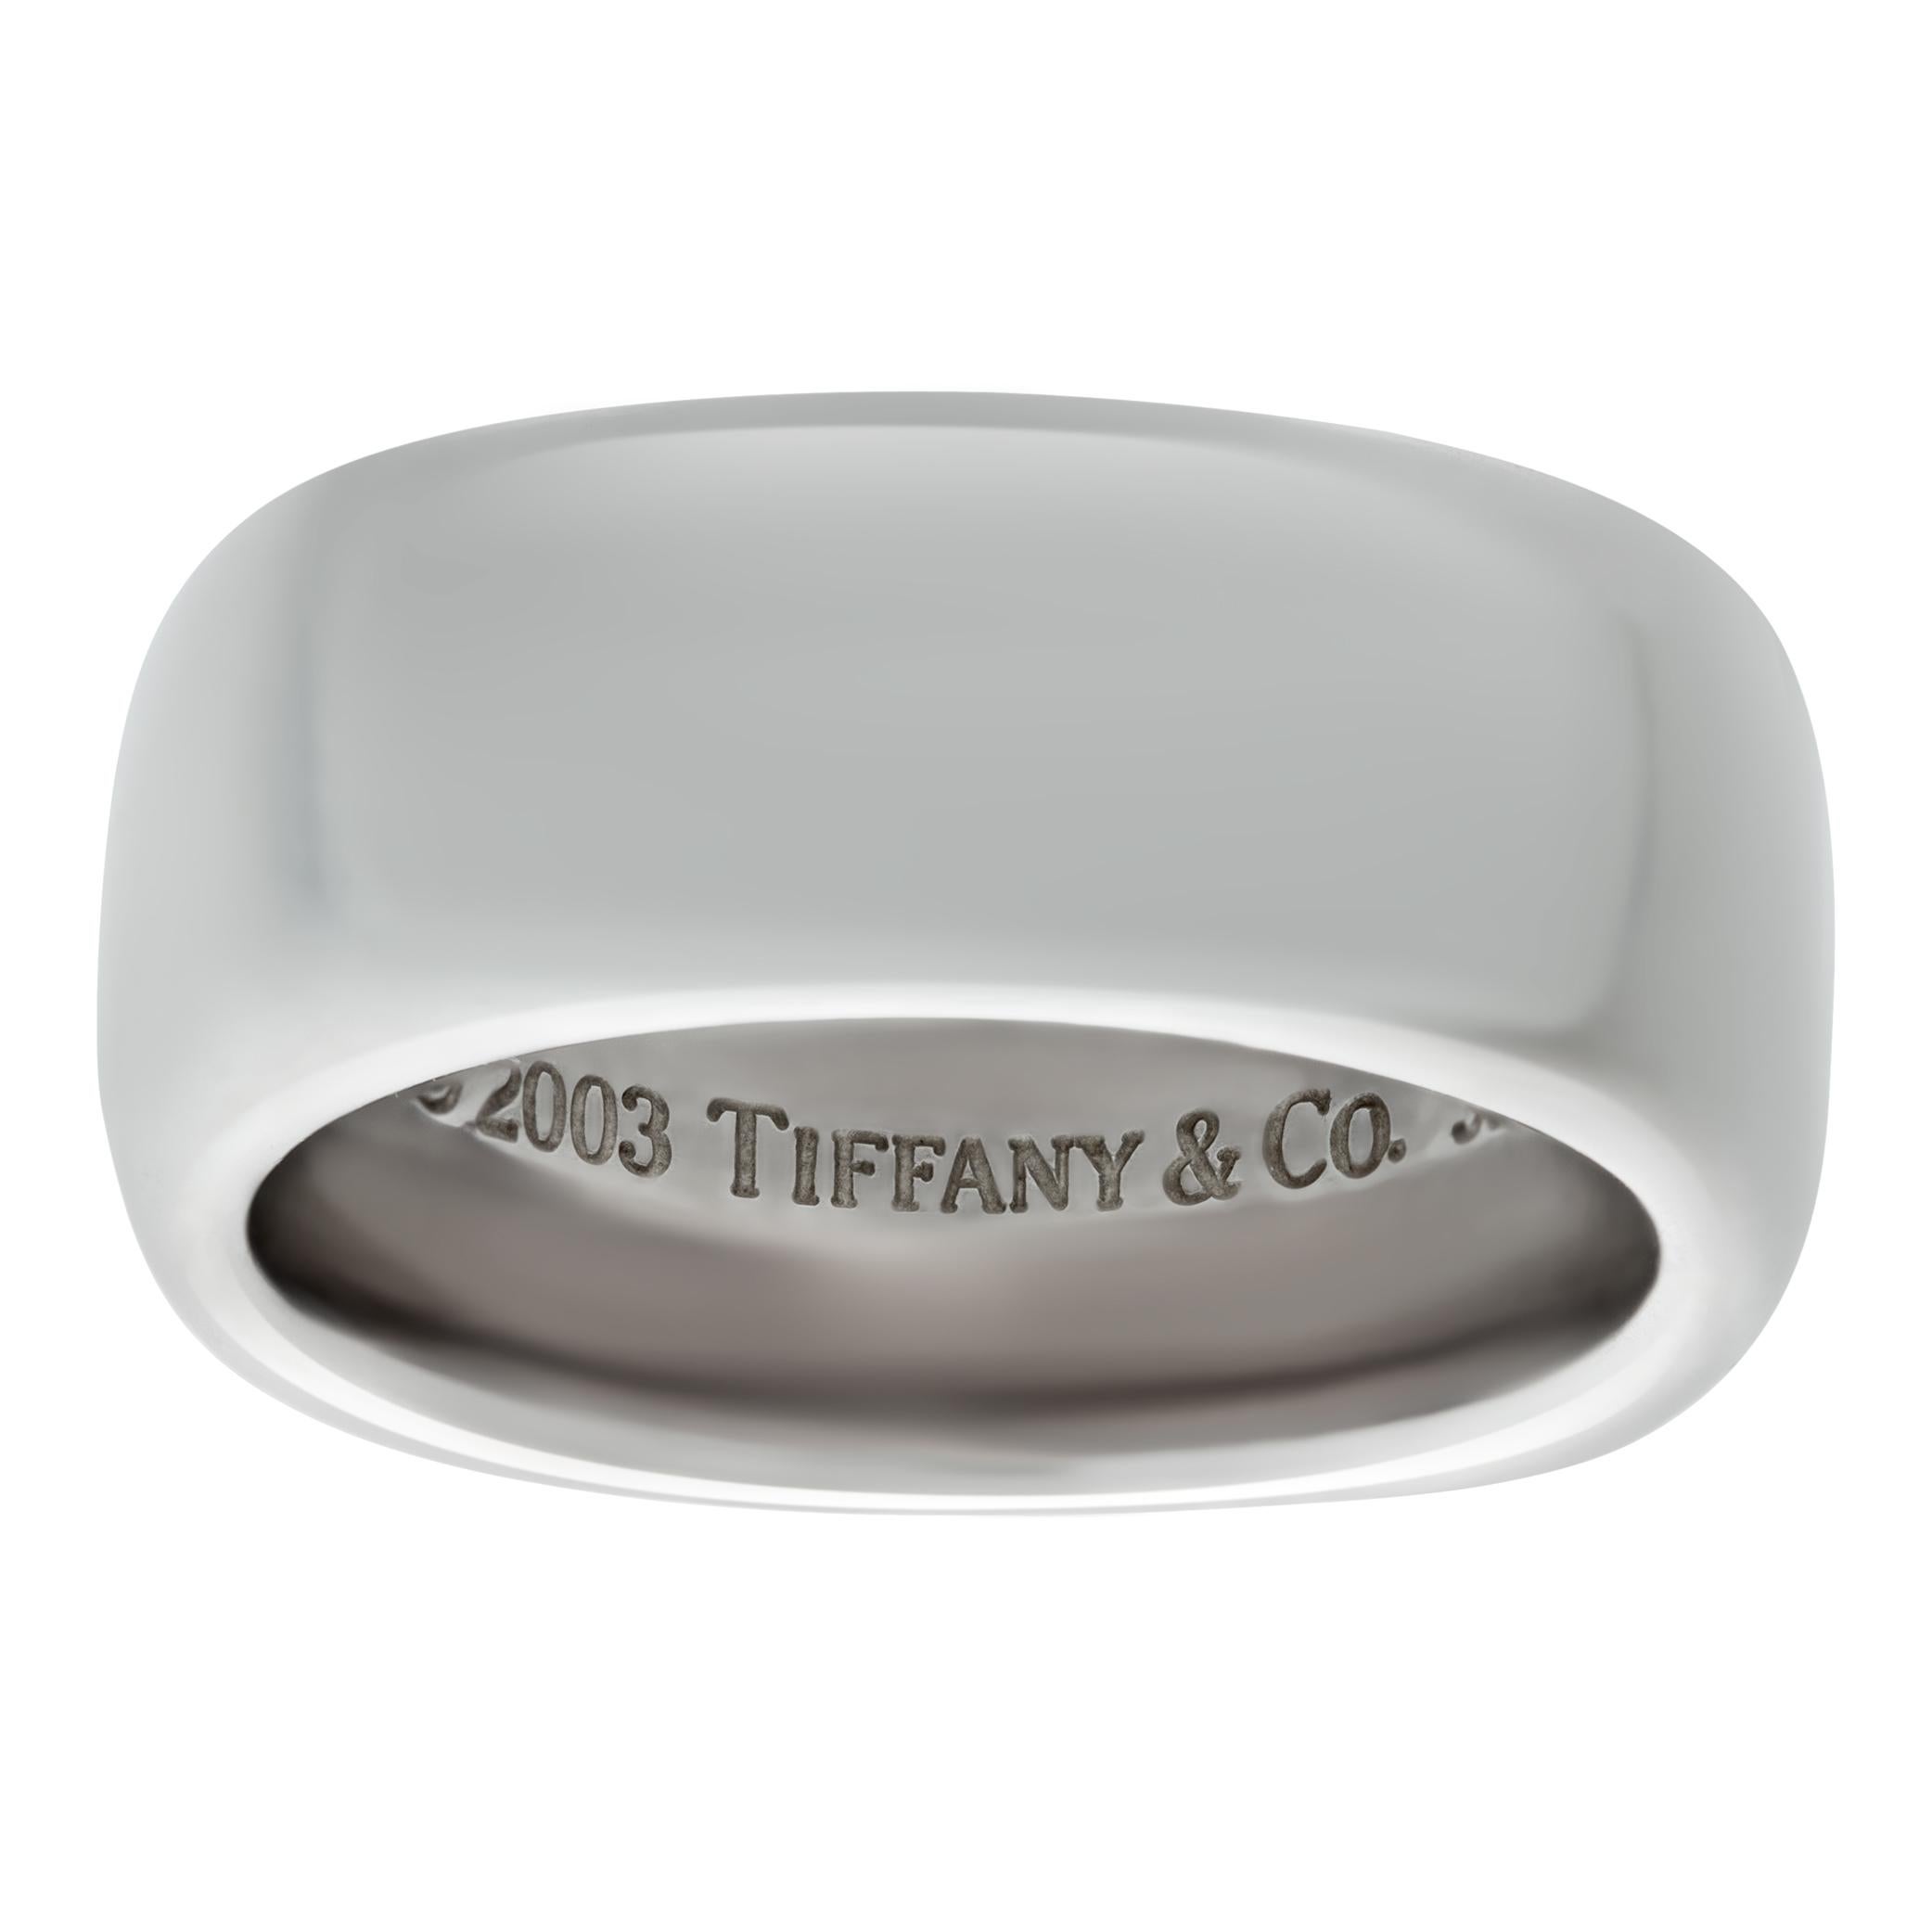 Tiffany & Co. 2003 Ring aus Sterlingsilber